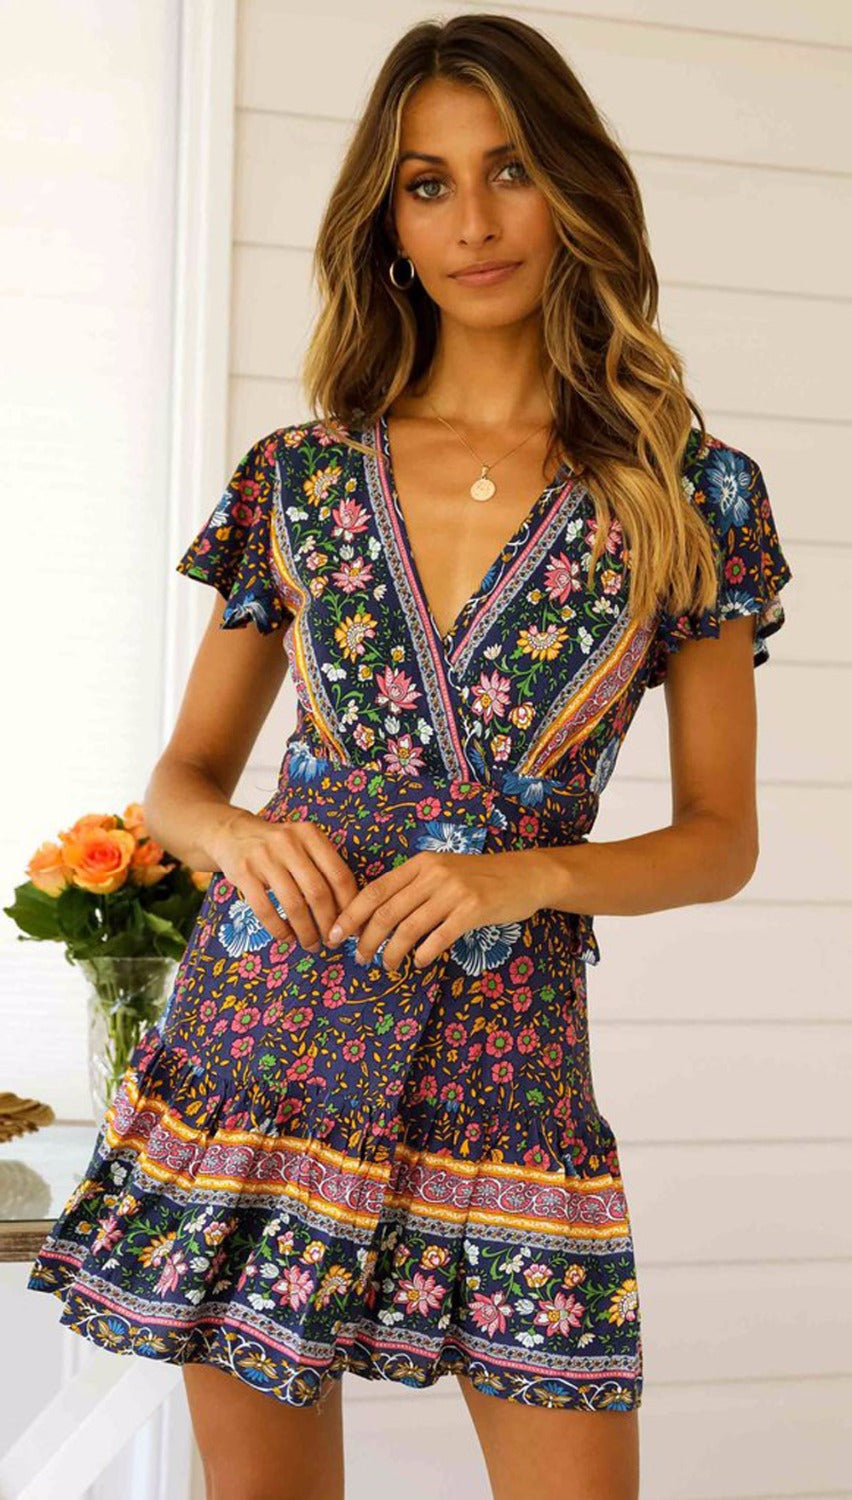 Floral Print dress